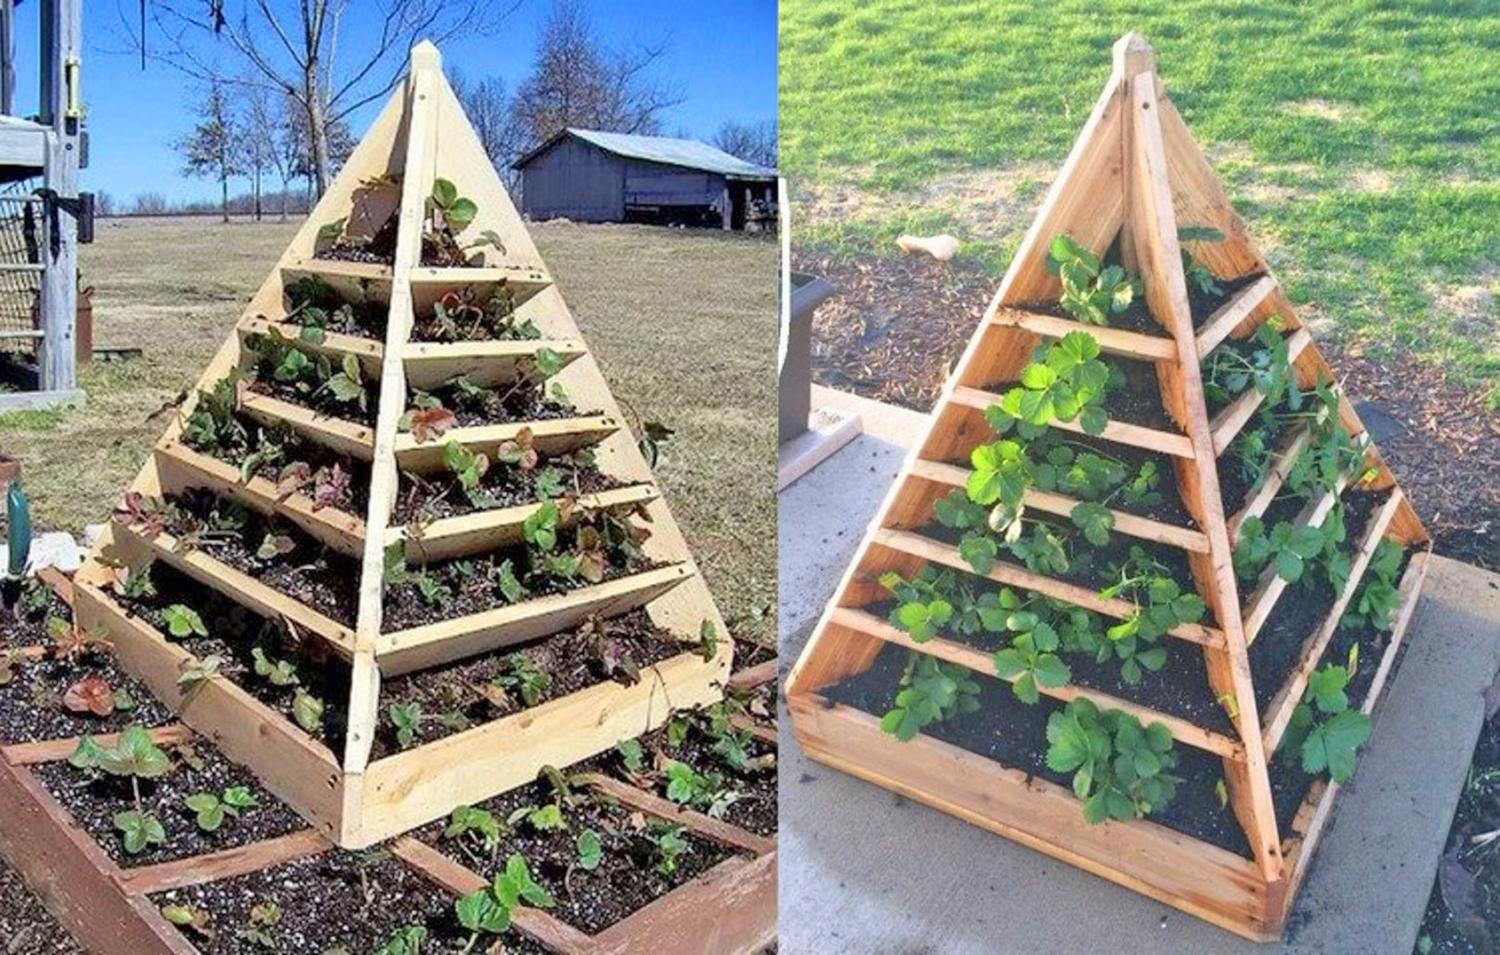 DIY Strawberry Pyramid Planter - Vertical wooden strawberry planter